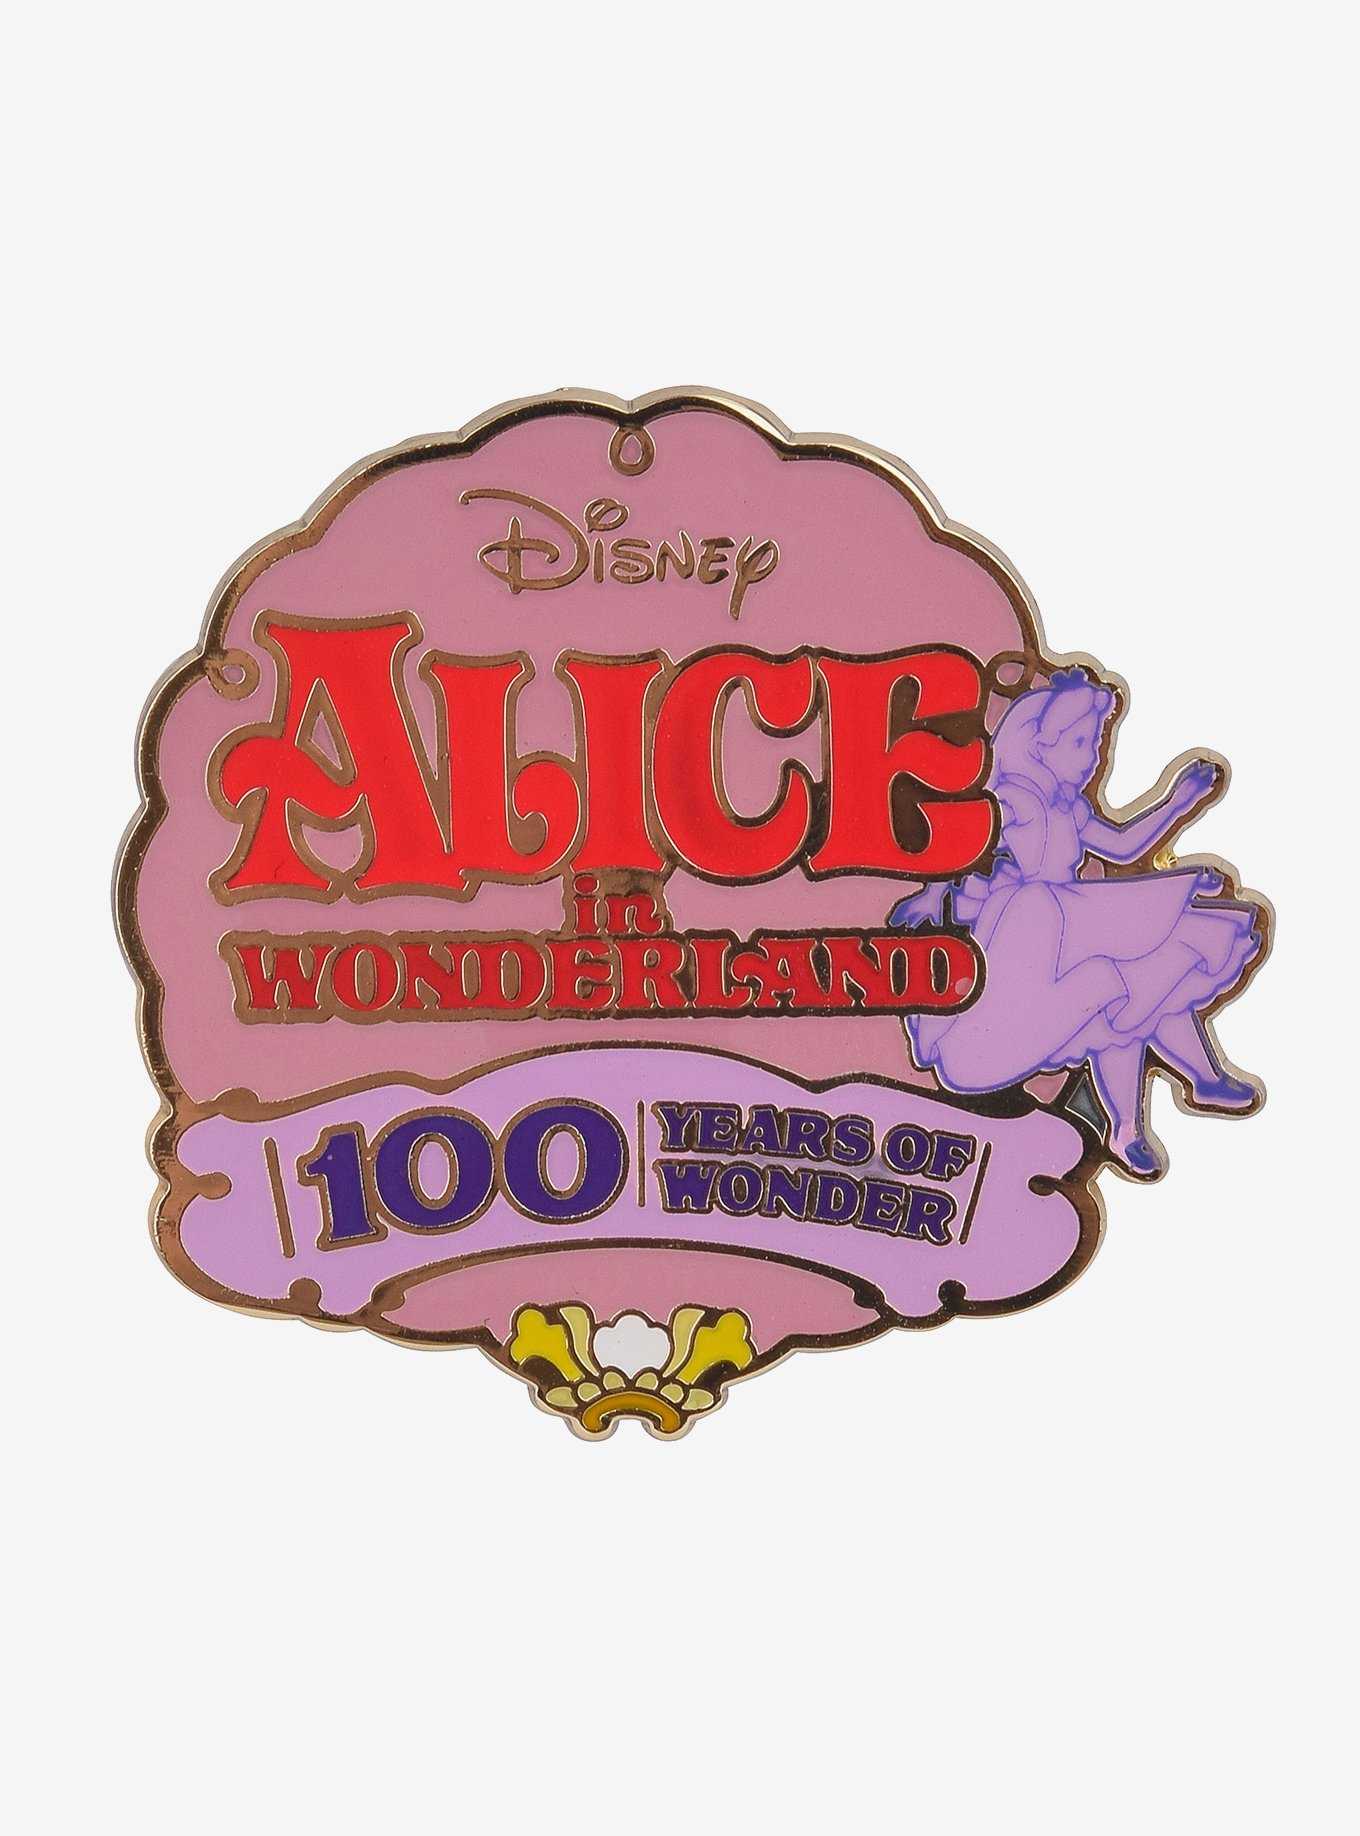 Disney 100 Alice in Wonderland Logo Enamel Pin - BoxLunch Exclusive, , hi-res